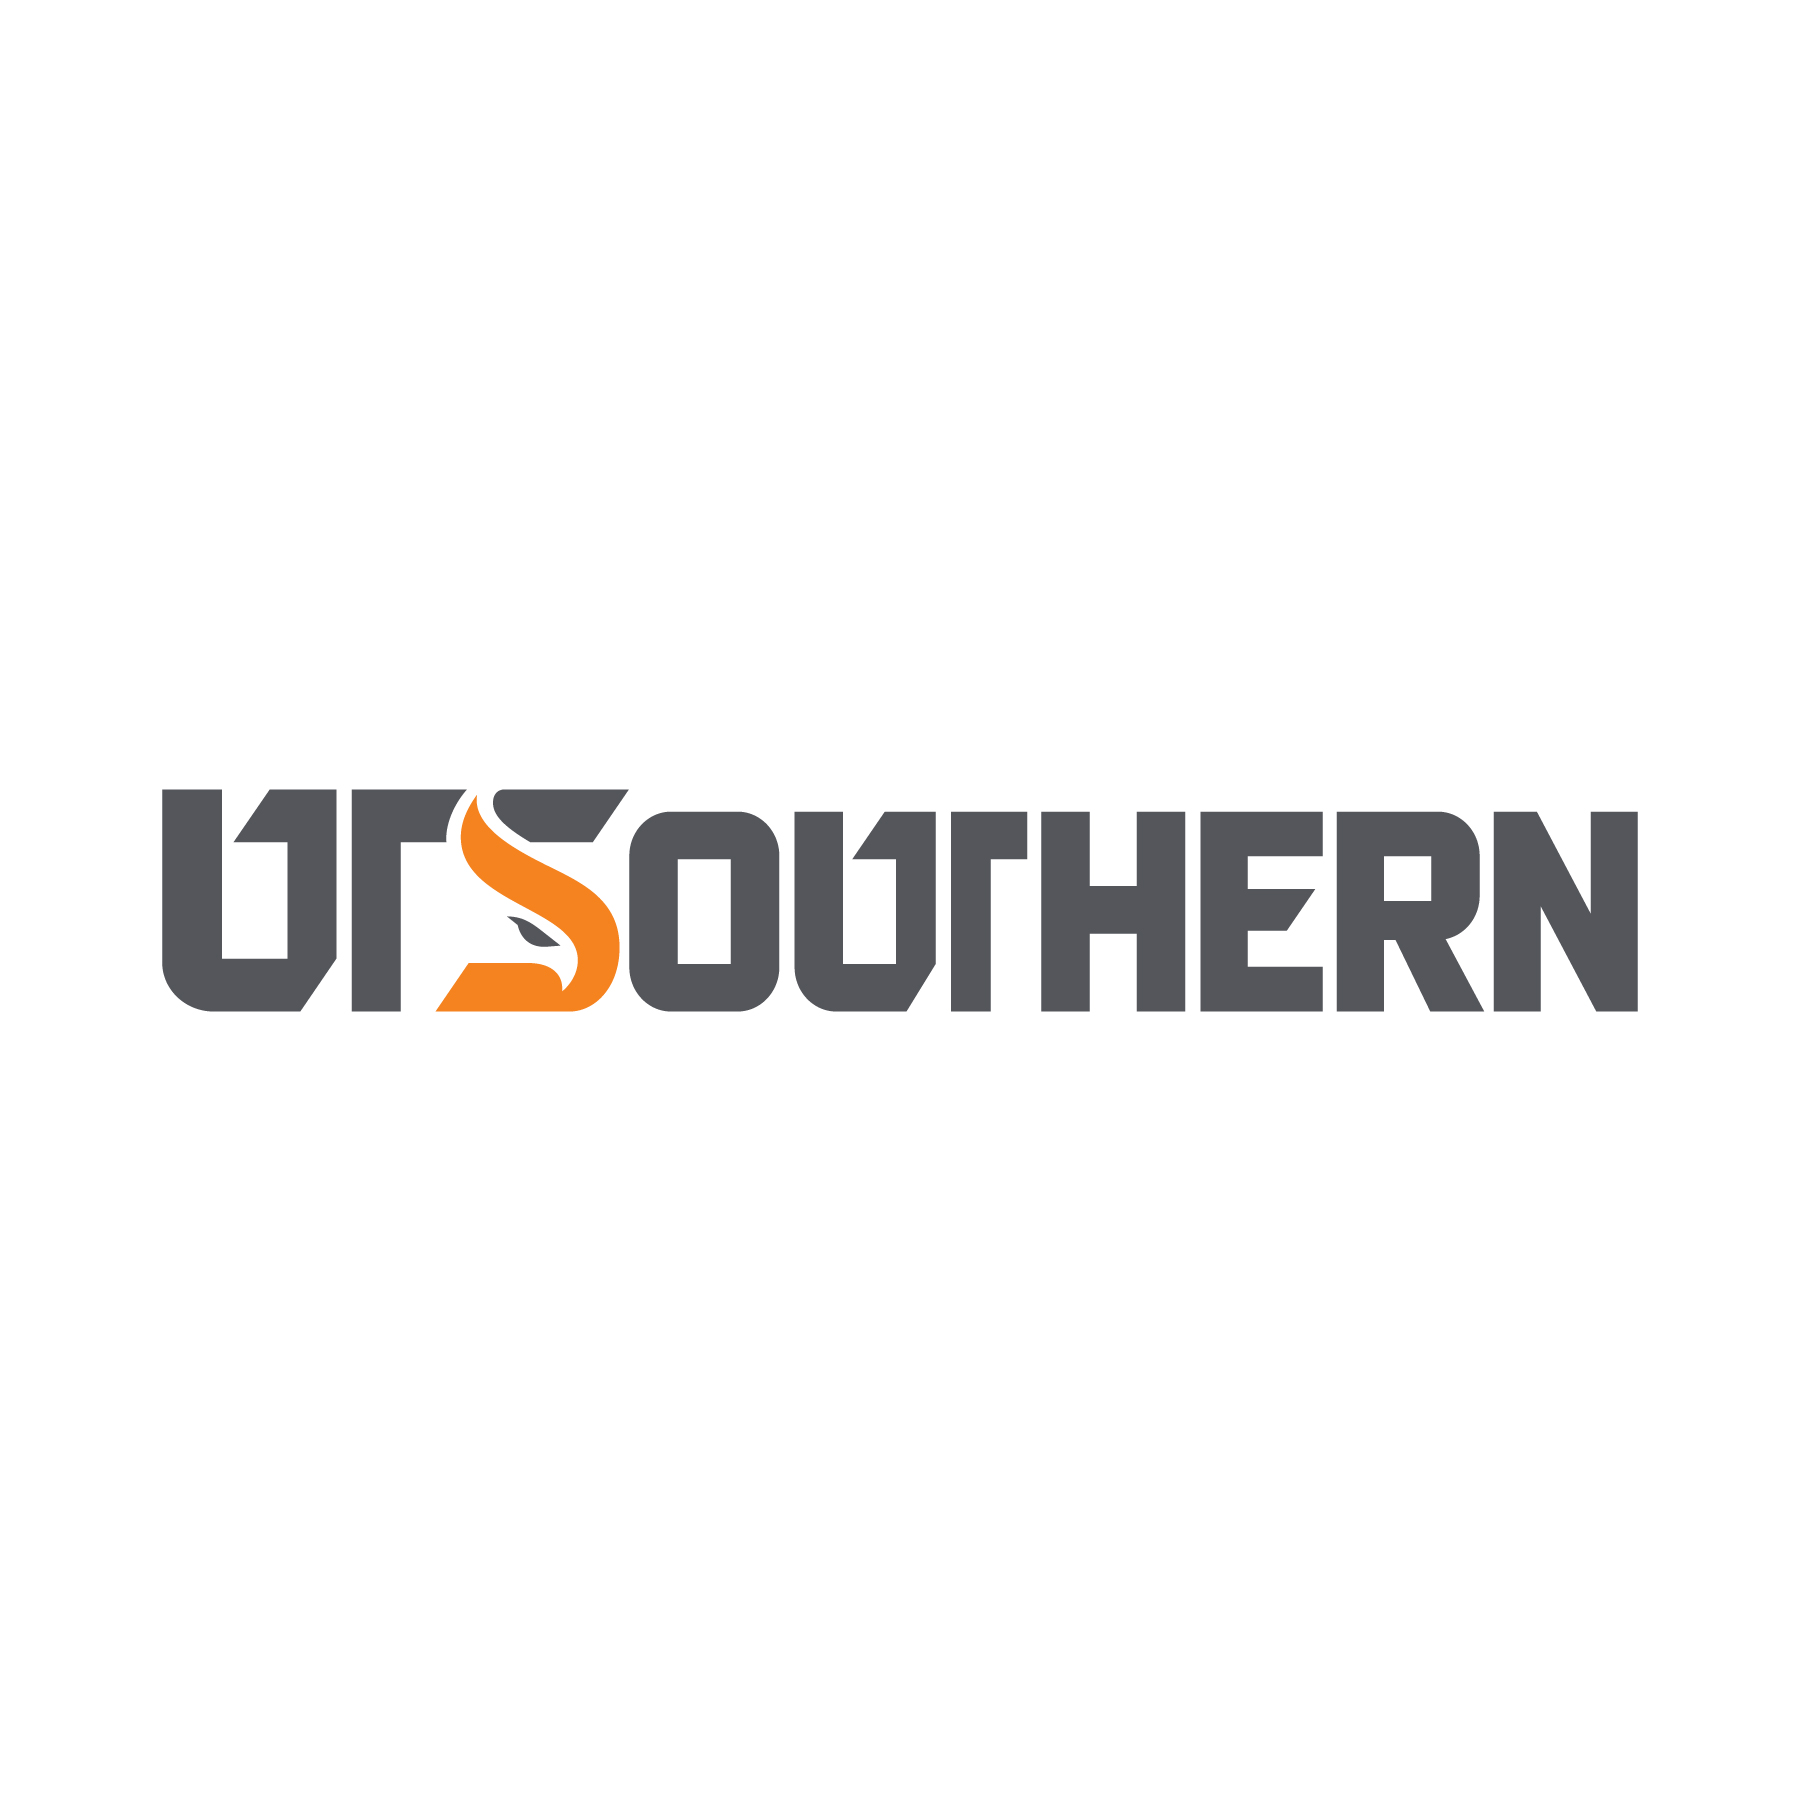 UT Southern